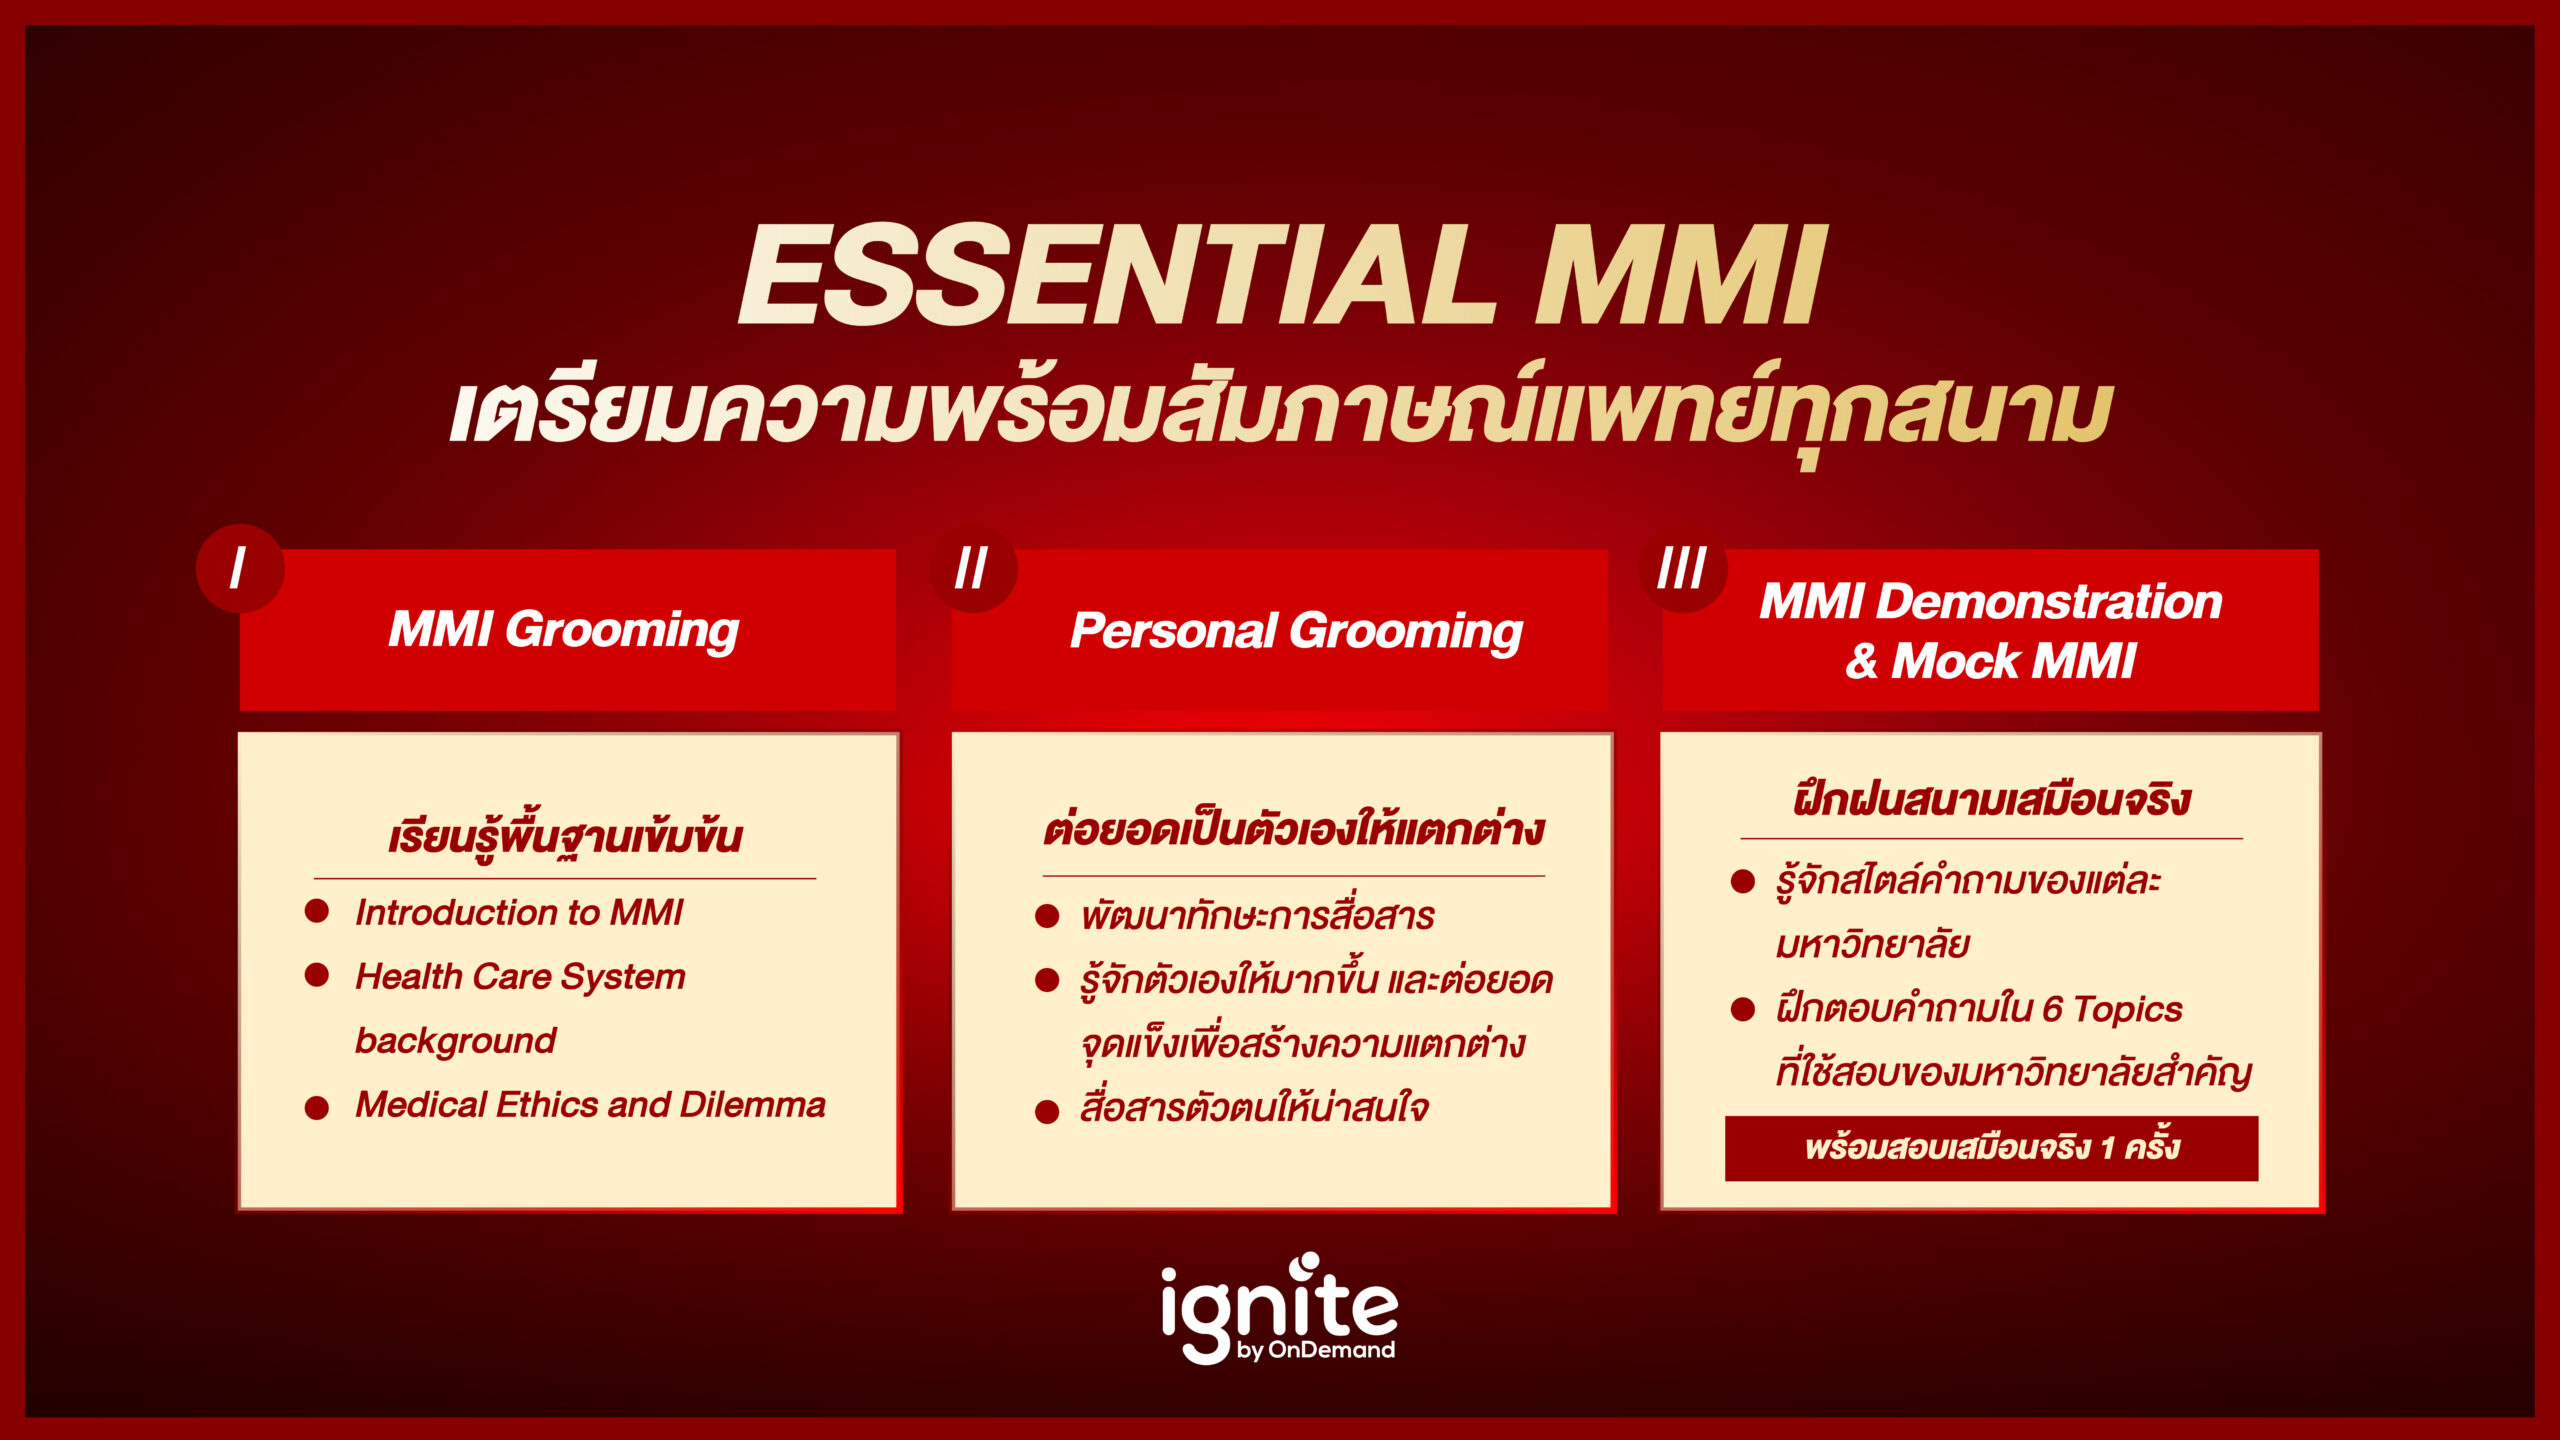 Essential MMI เตรียมพร้อมก่อนการสอบ - ignite by OnDemand - Banner